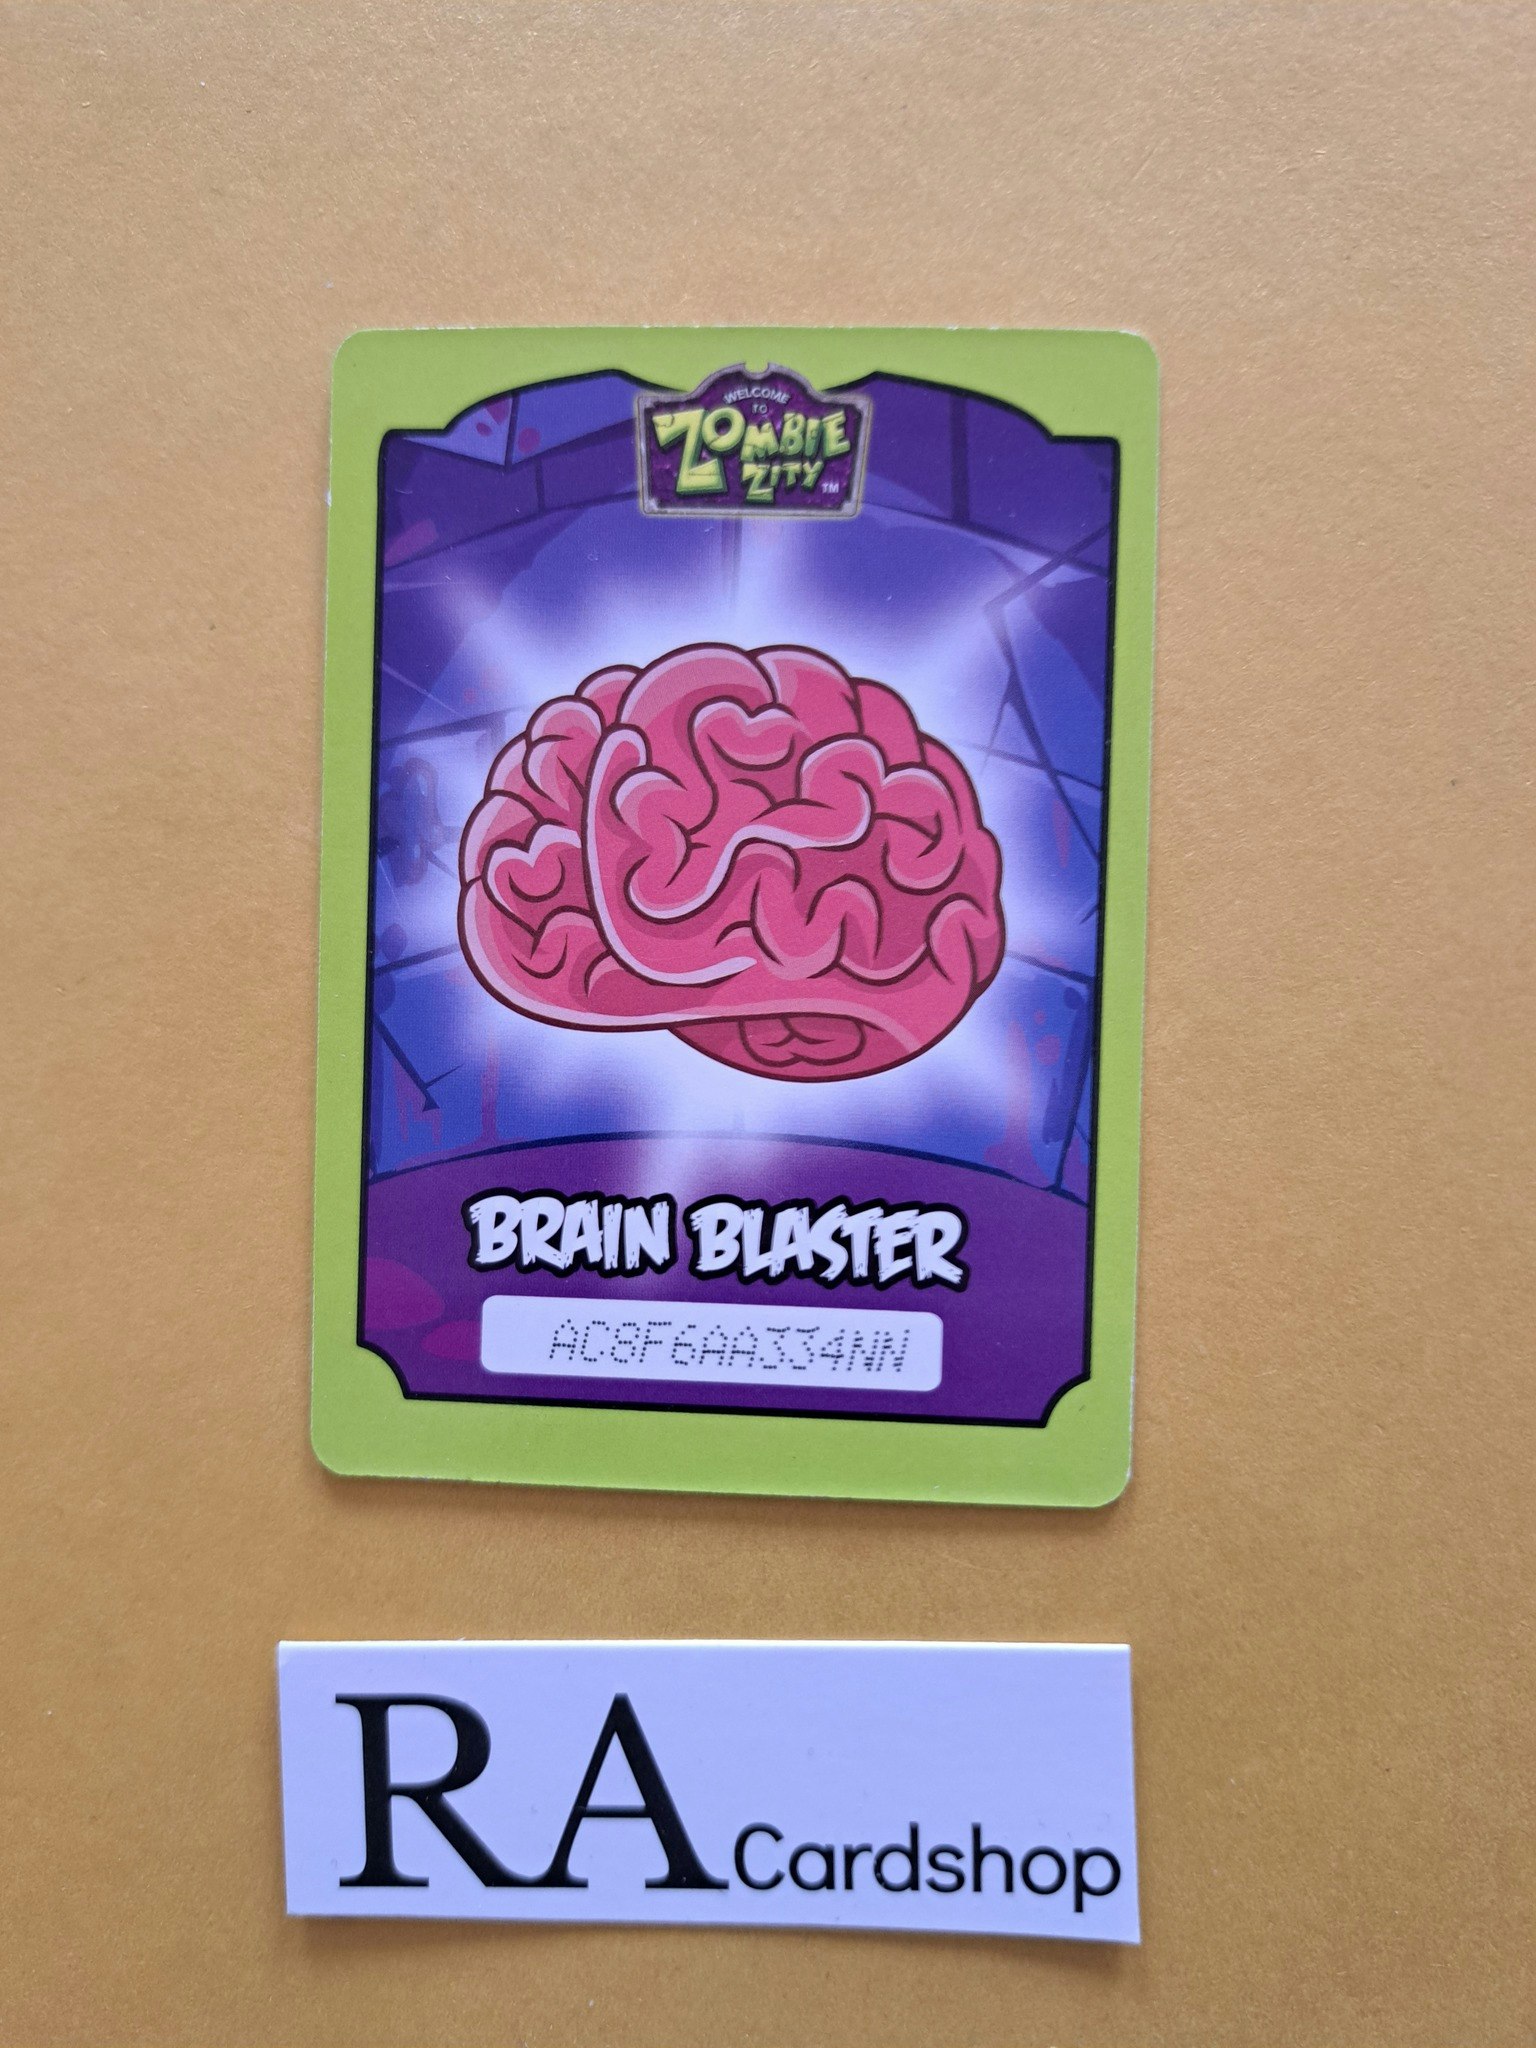 Brain Blaster Codes Card Zombie Zity